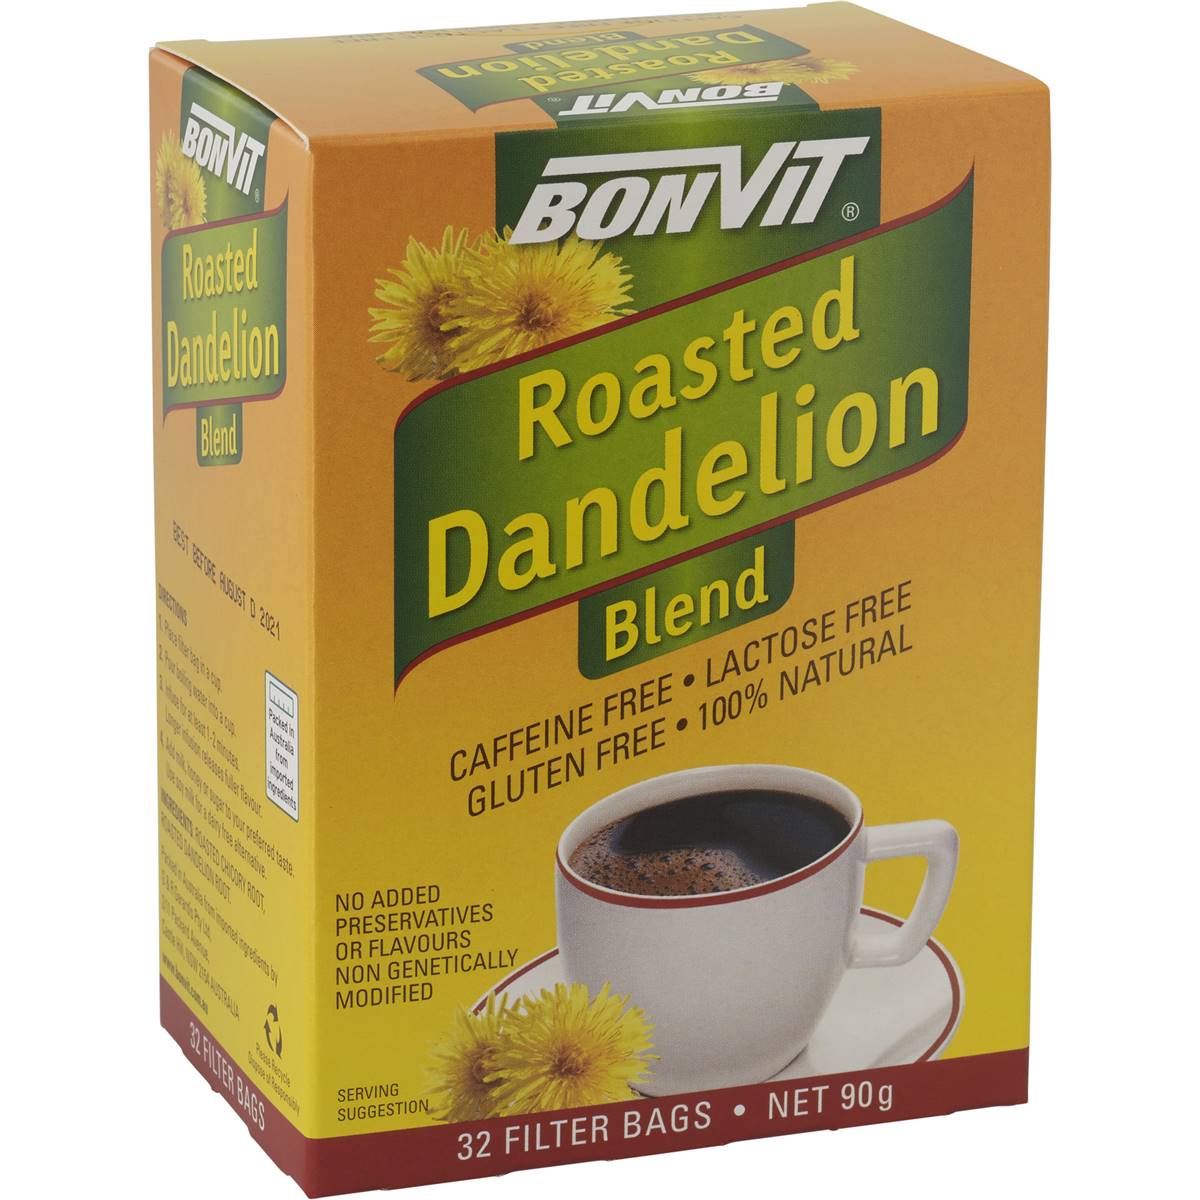 Calories in Bonvit Roasted Dandelion Tea Bags